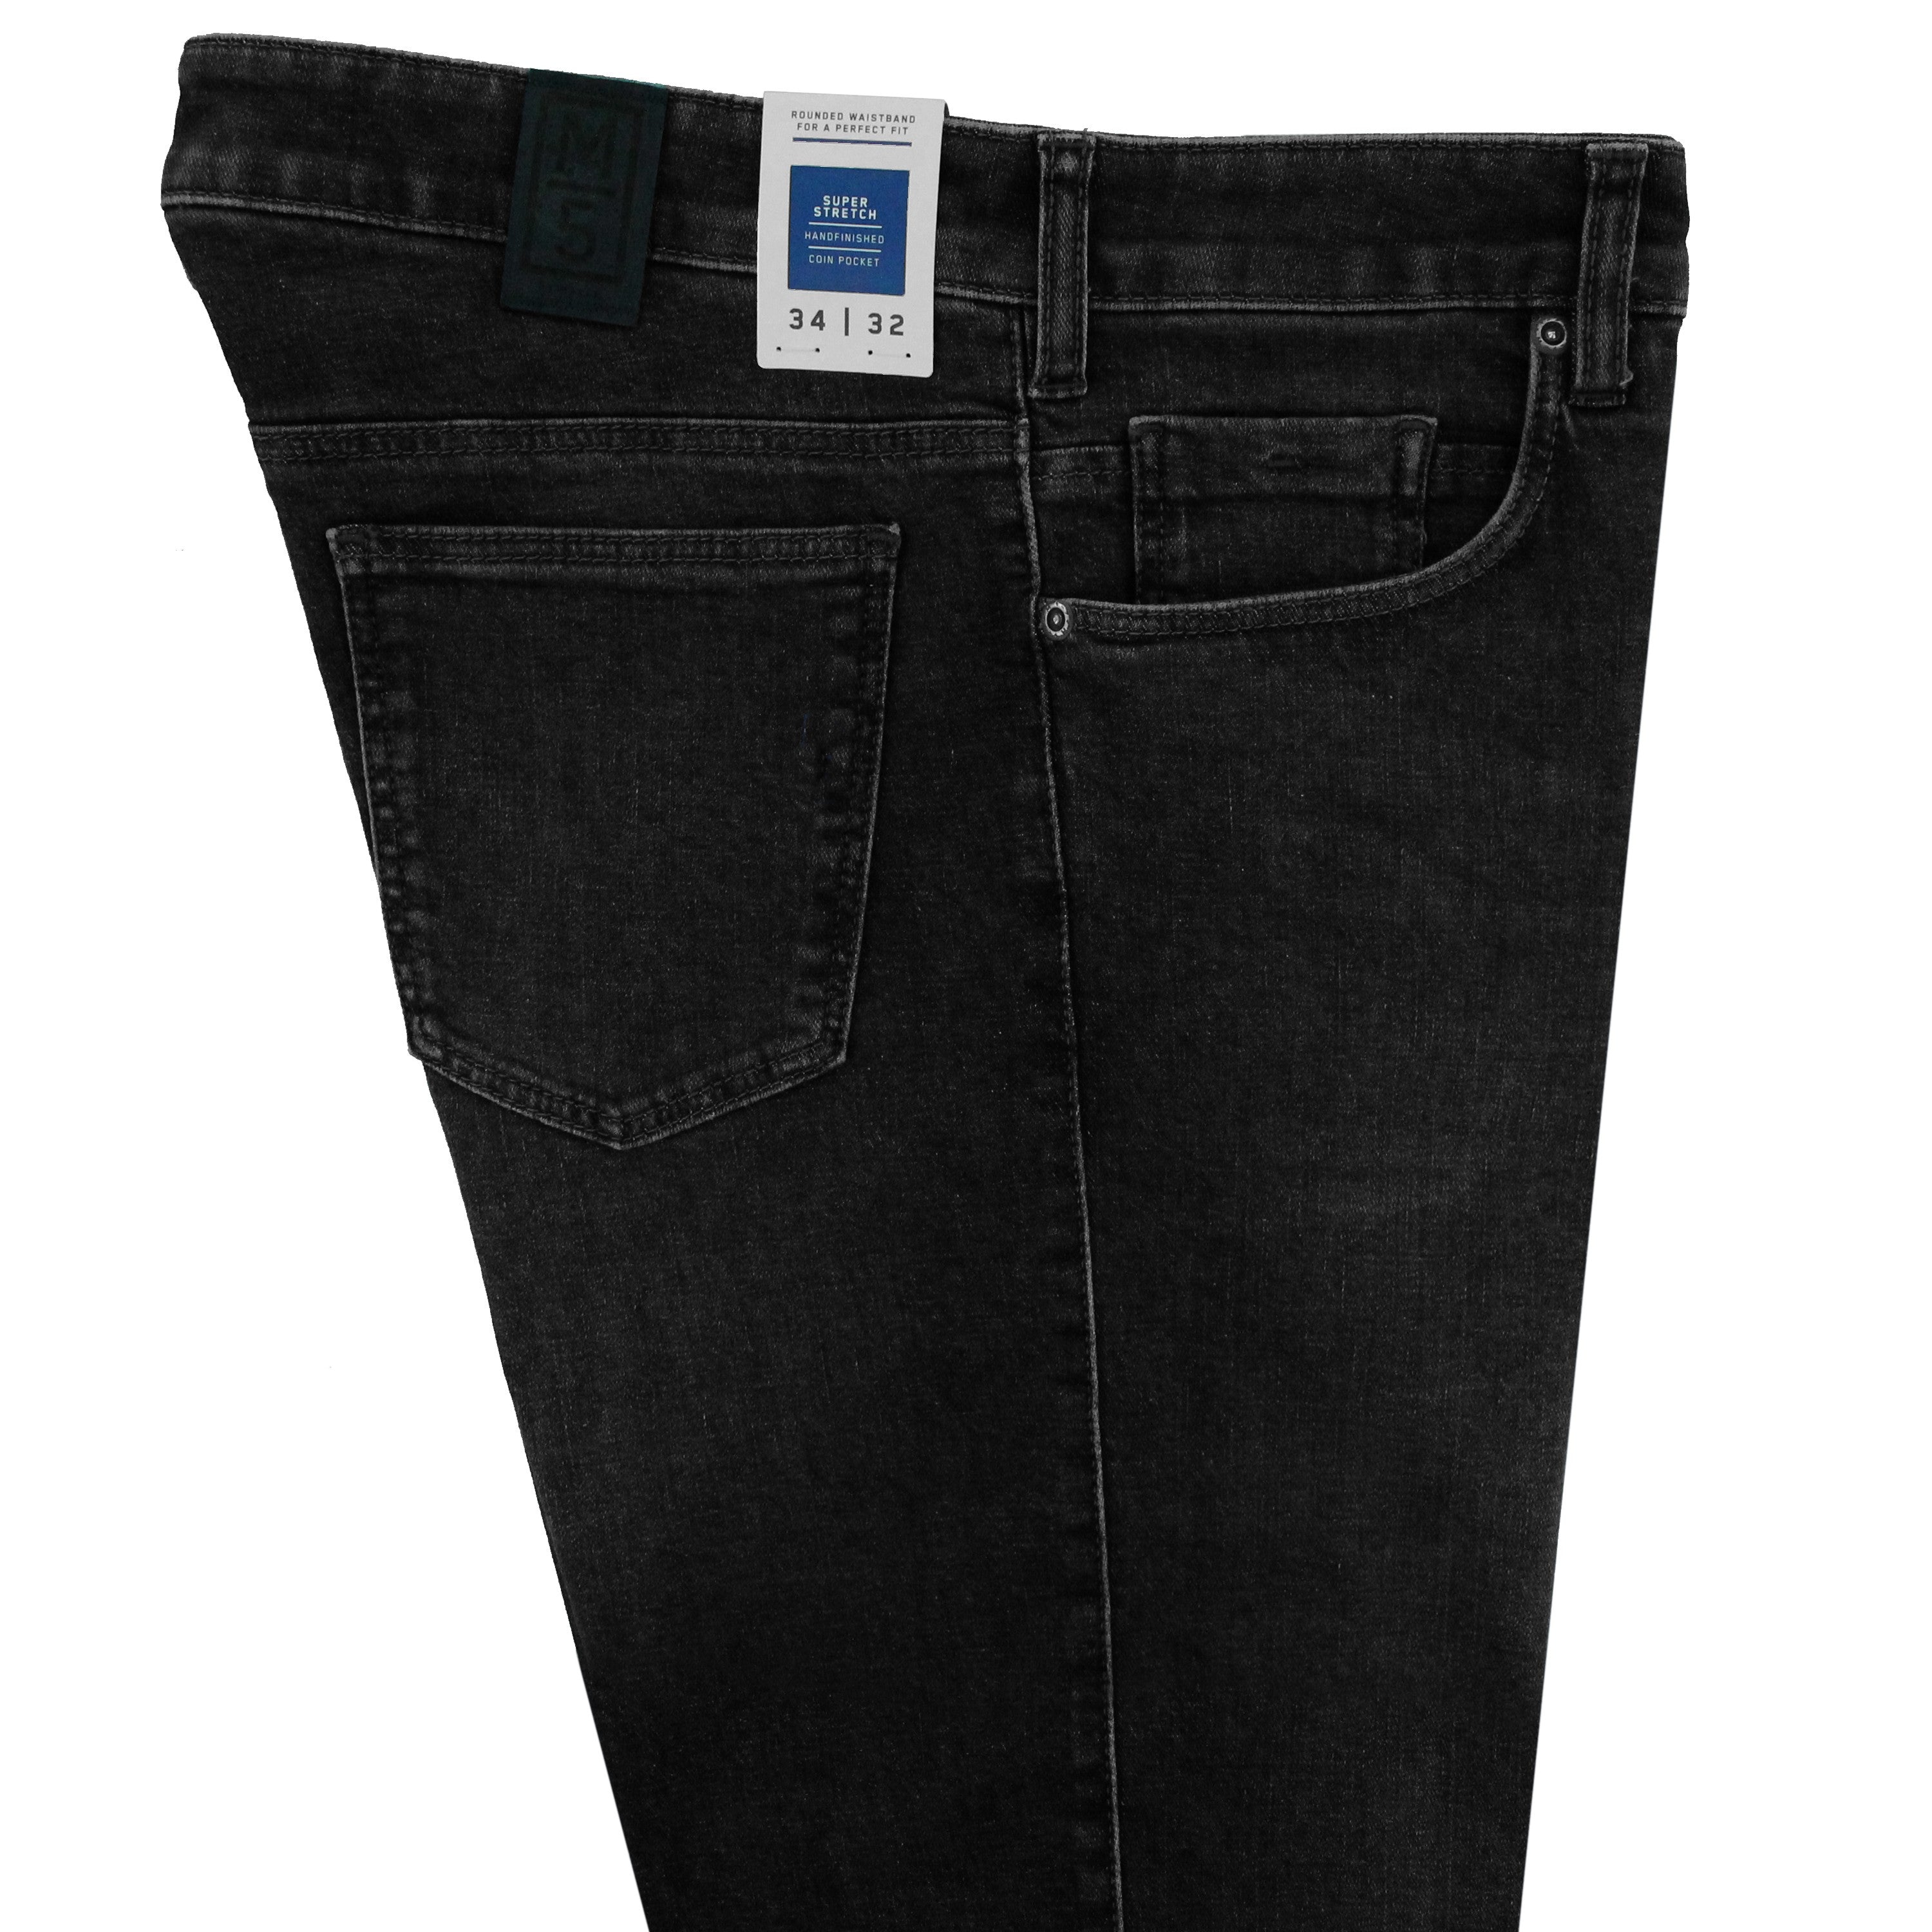 Meyer M5 Slim Fit Stretch Jeans Charcoal Short Leg